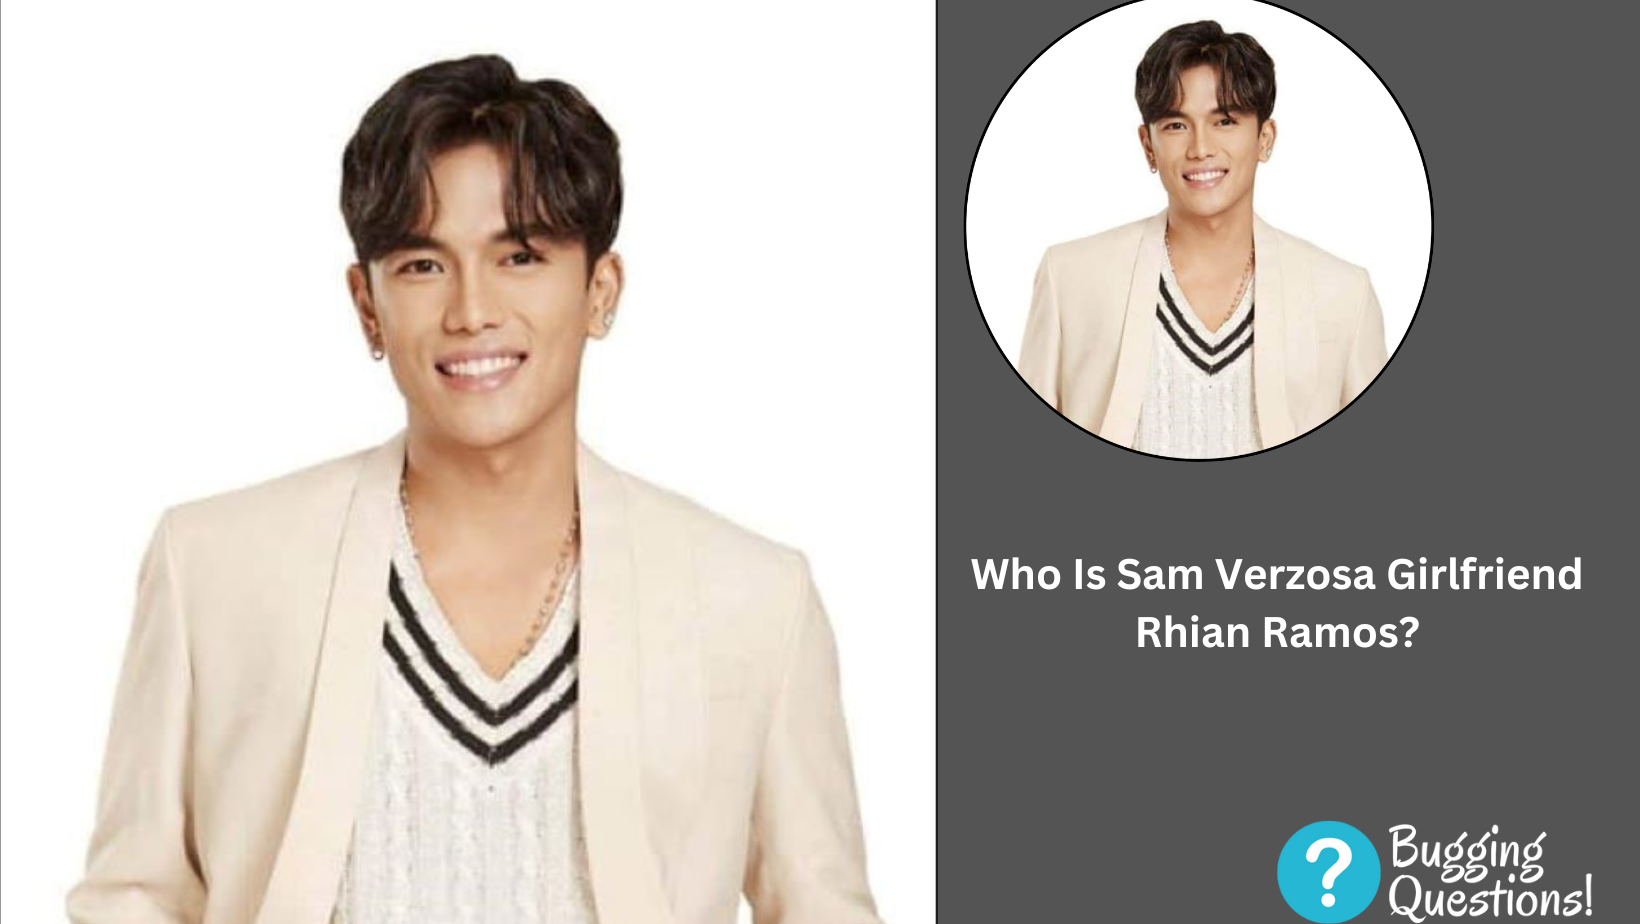 Who Is Sam Verzosa Girlfriend Rhian Ramos?